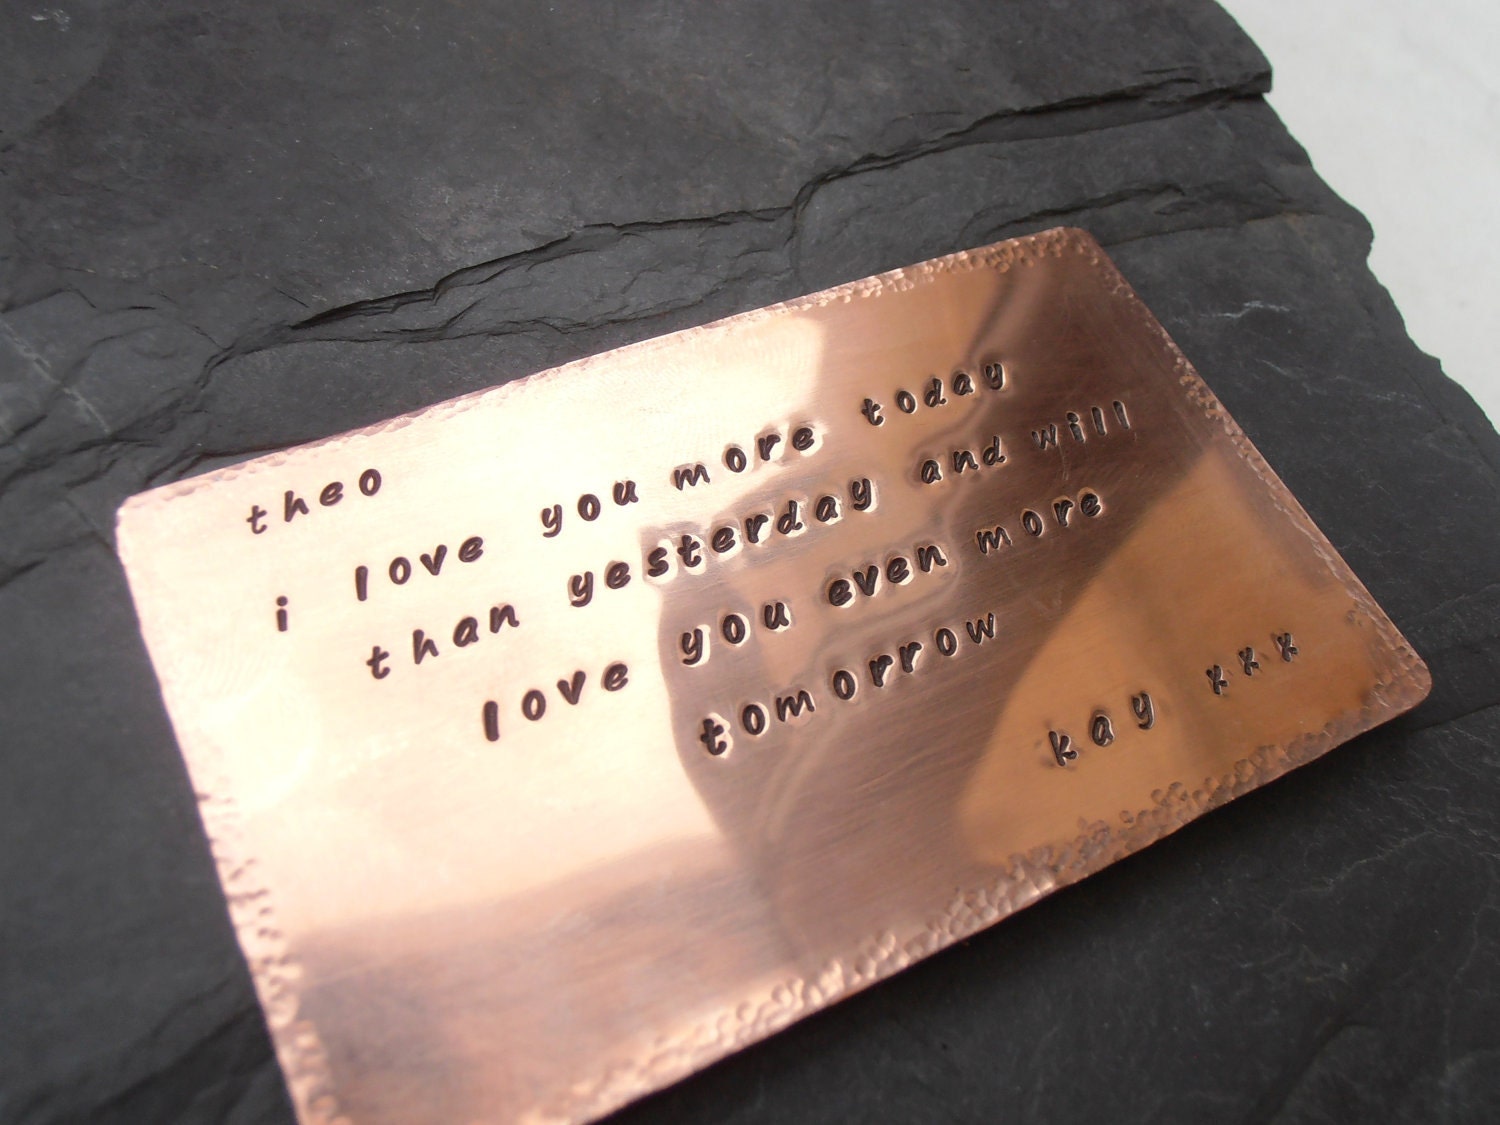 7th wedding anniversary gift copper or aluminum keepsake